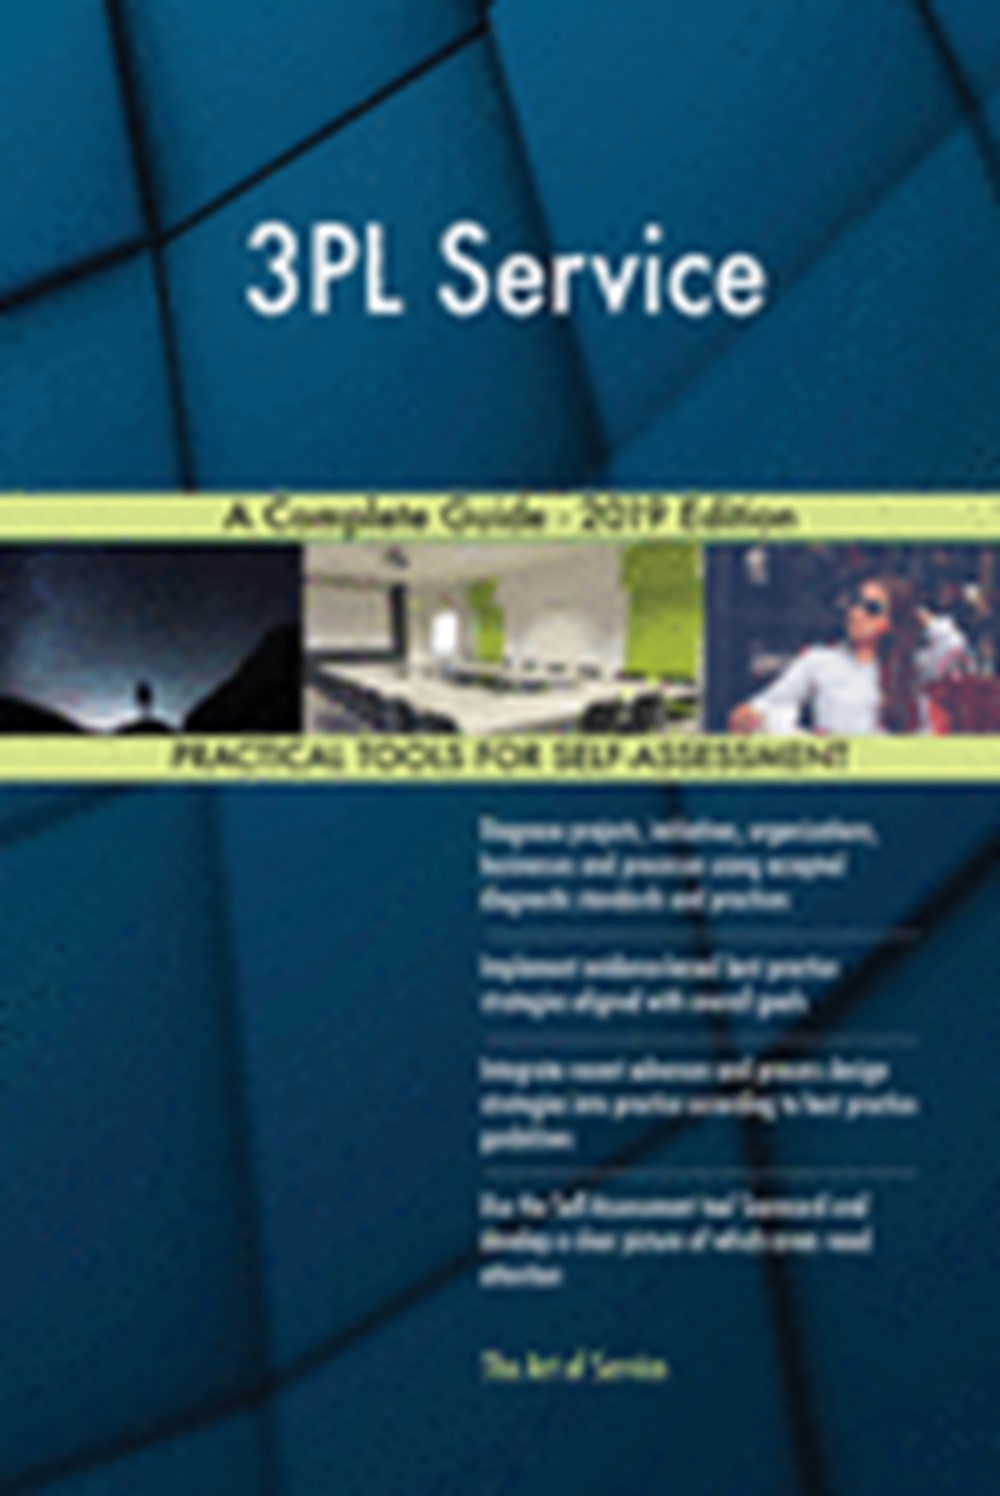 3PL Service A Complete Guide - 2019 Edition